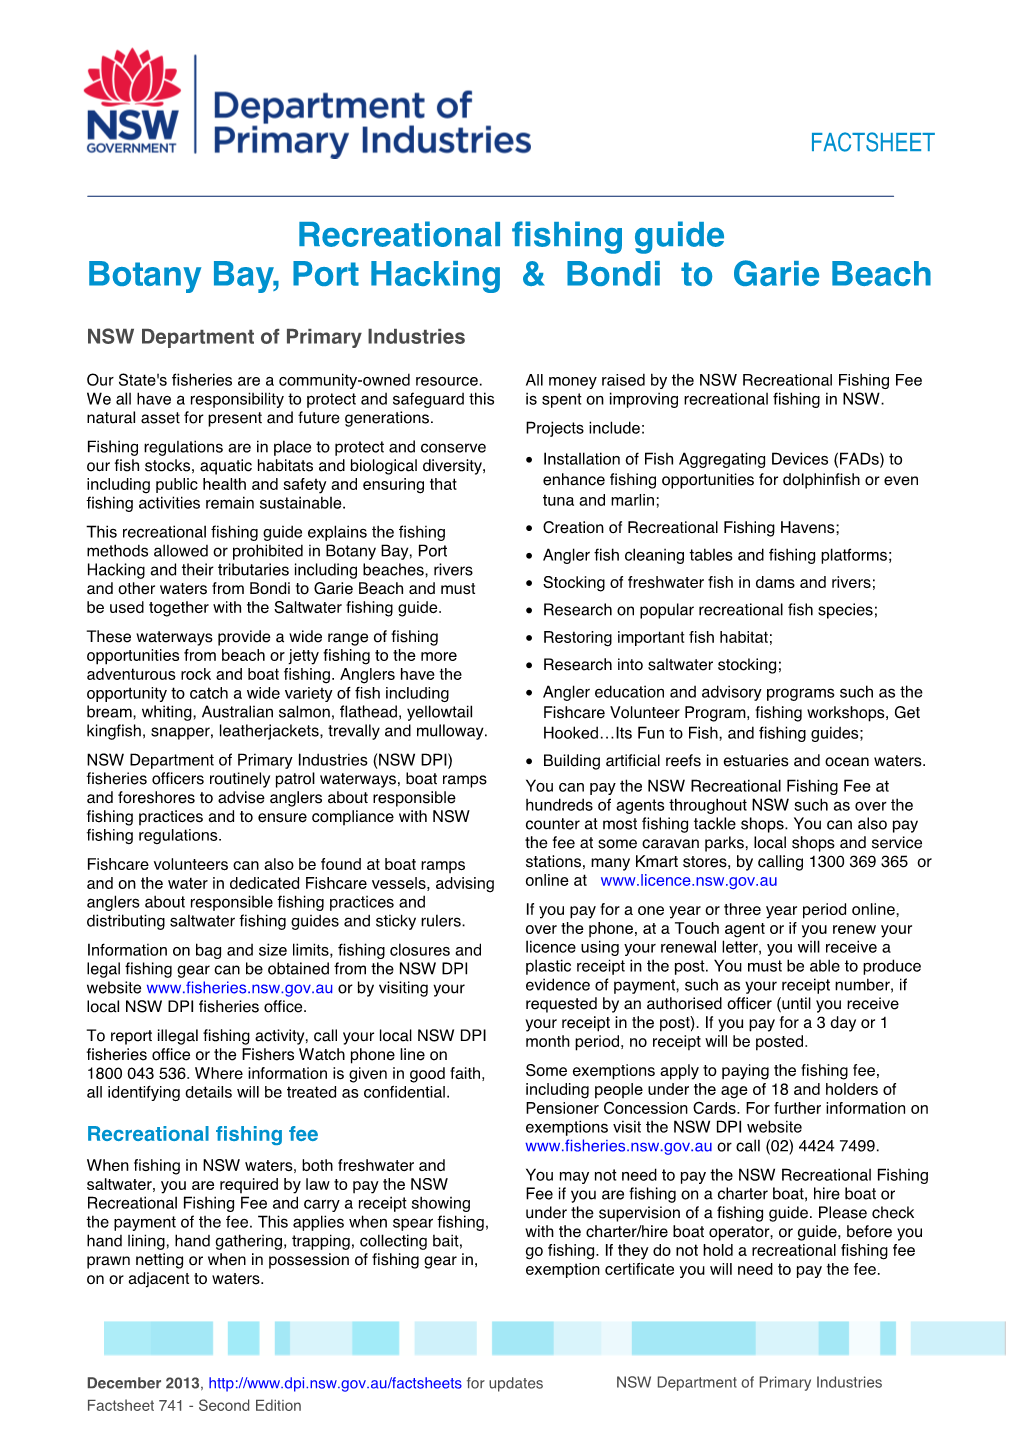 Recreational Fishing Guide Botany Bay, Port Hacking & Bondi to Garie Beach